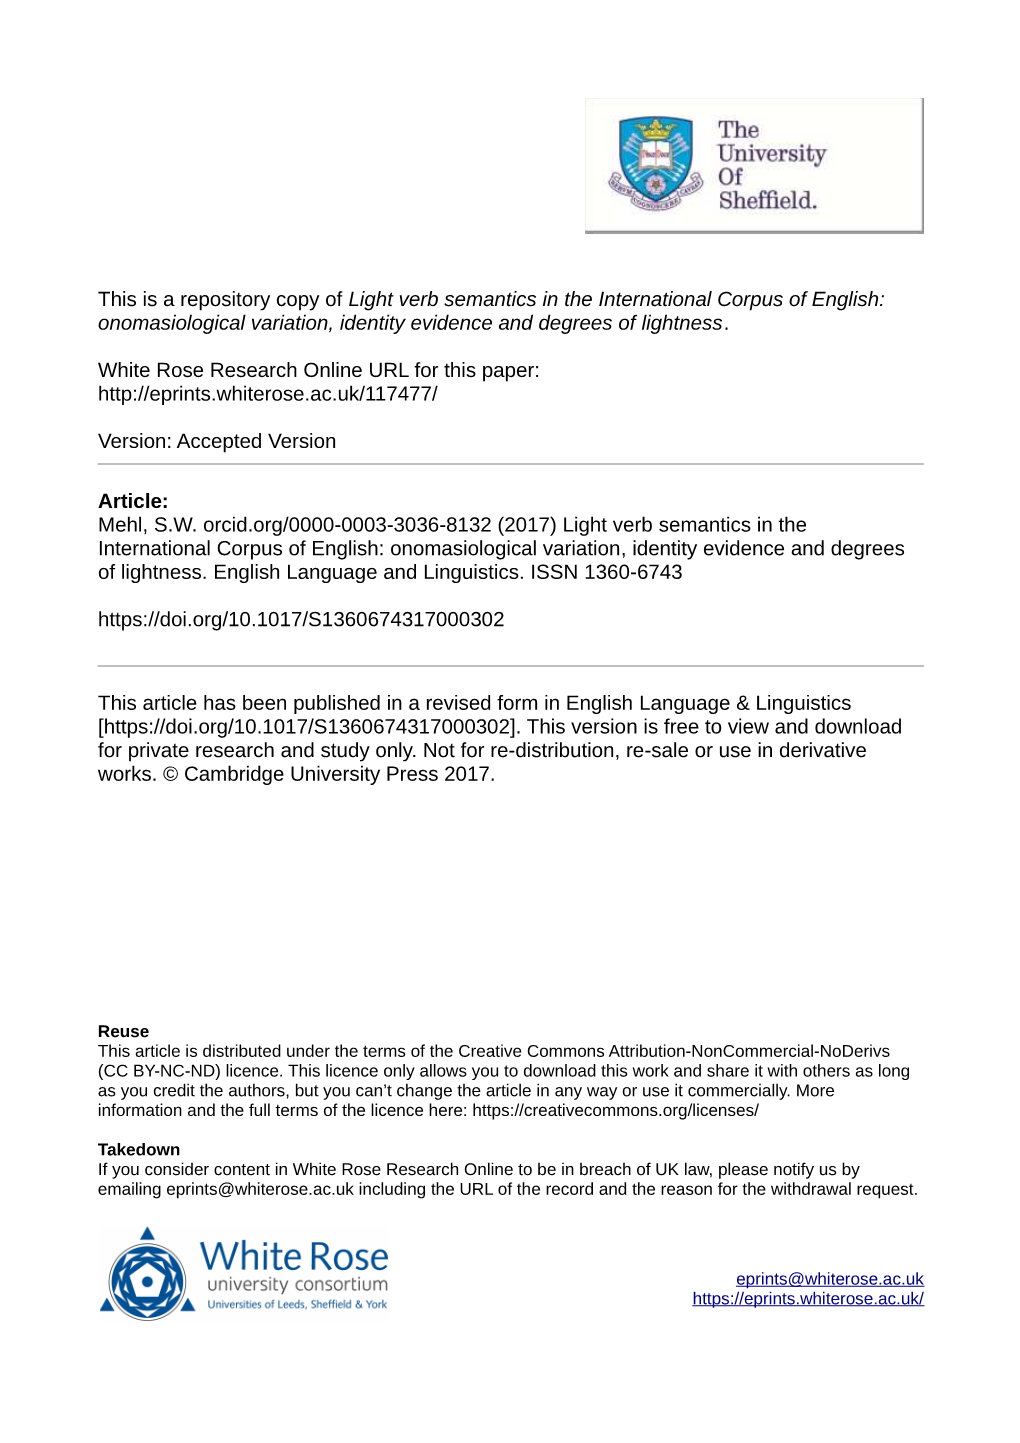 Light Verb Semantics in the International Corpus of English: Onomasiological Variation, Identity Evidence and Degrees of Lightness